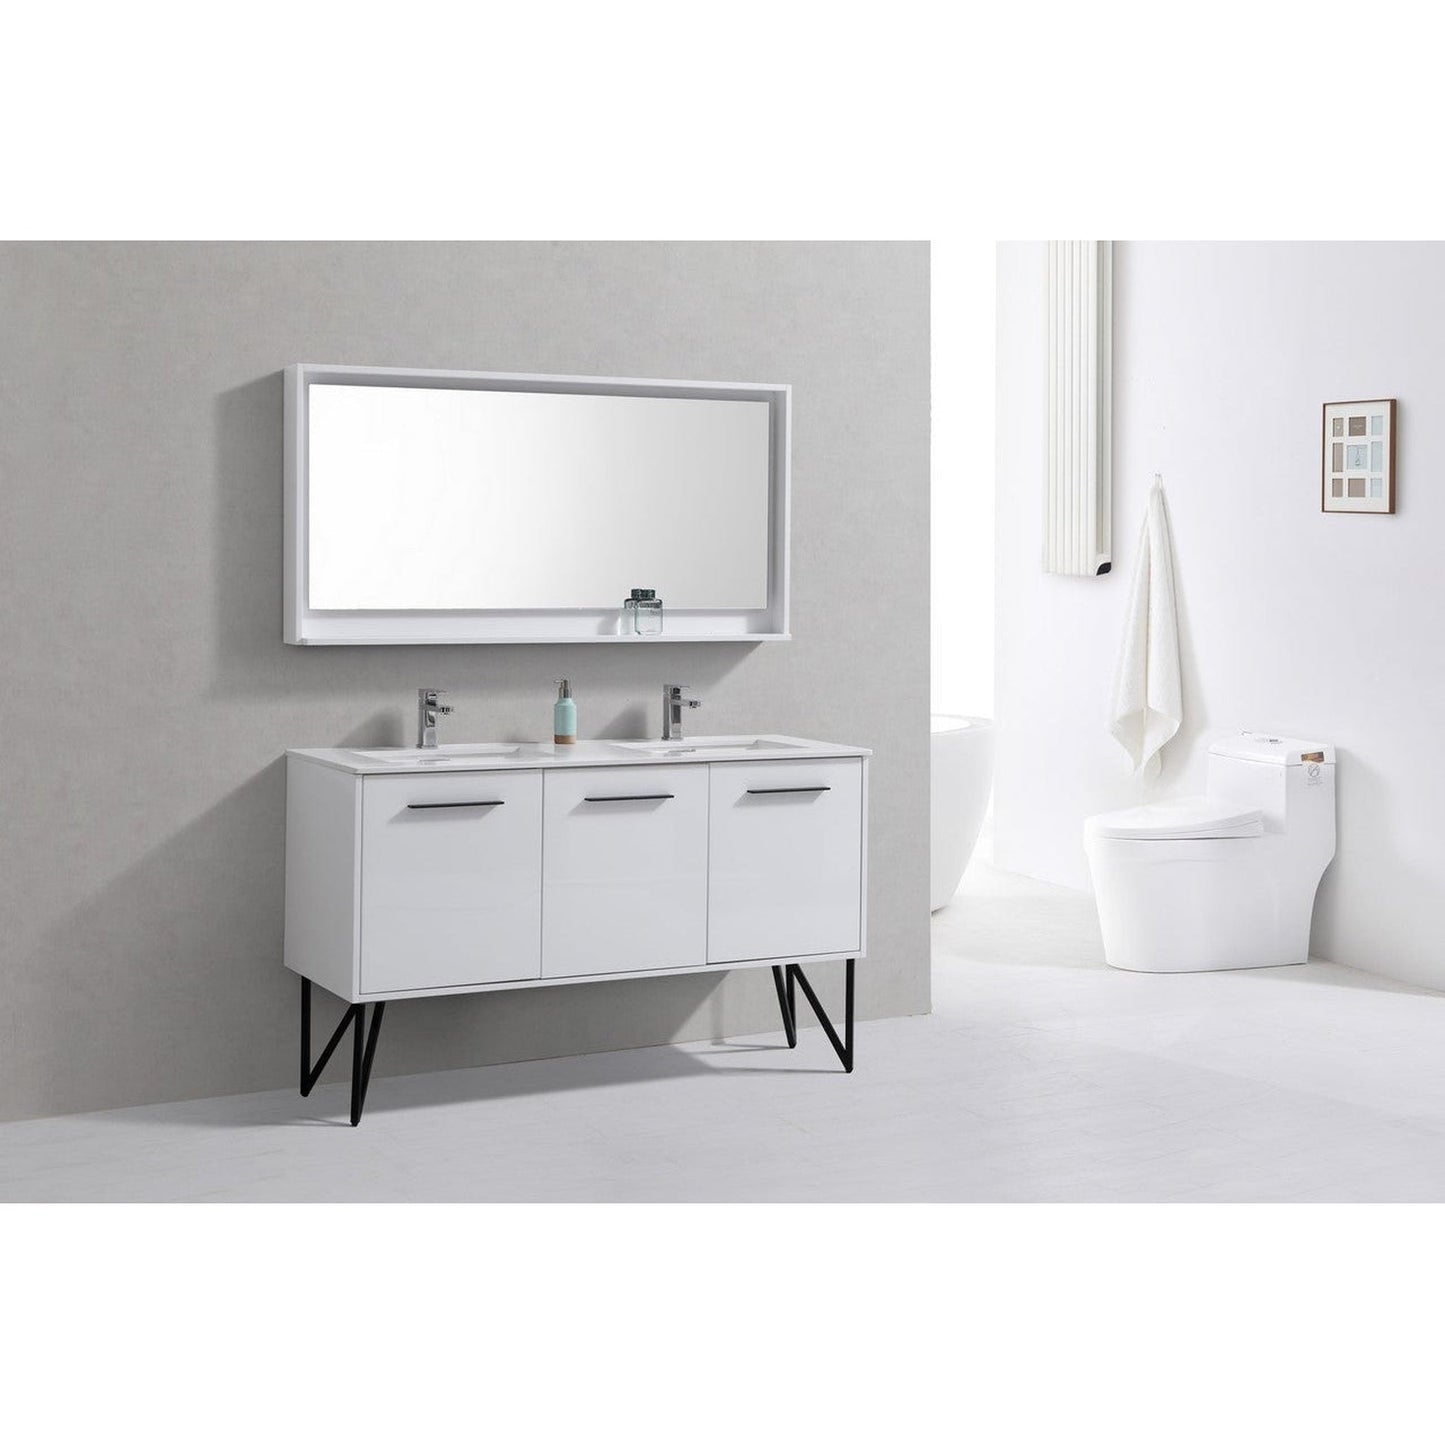 KubeBath Bosco 60" High Gloss White Modern Freestanding Bathroom Vanity With Single Undermount Sink With Overflow and 60" White Framed Mirror